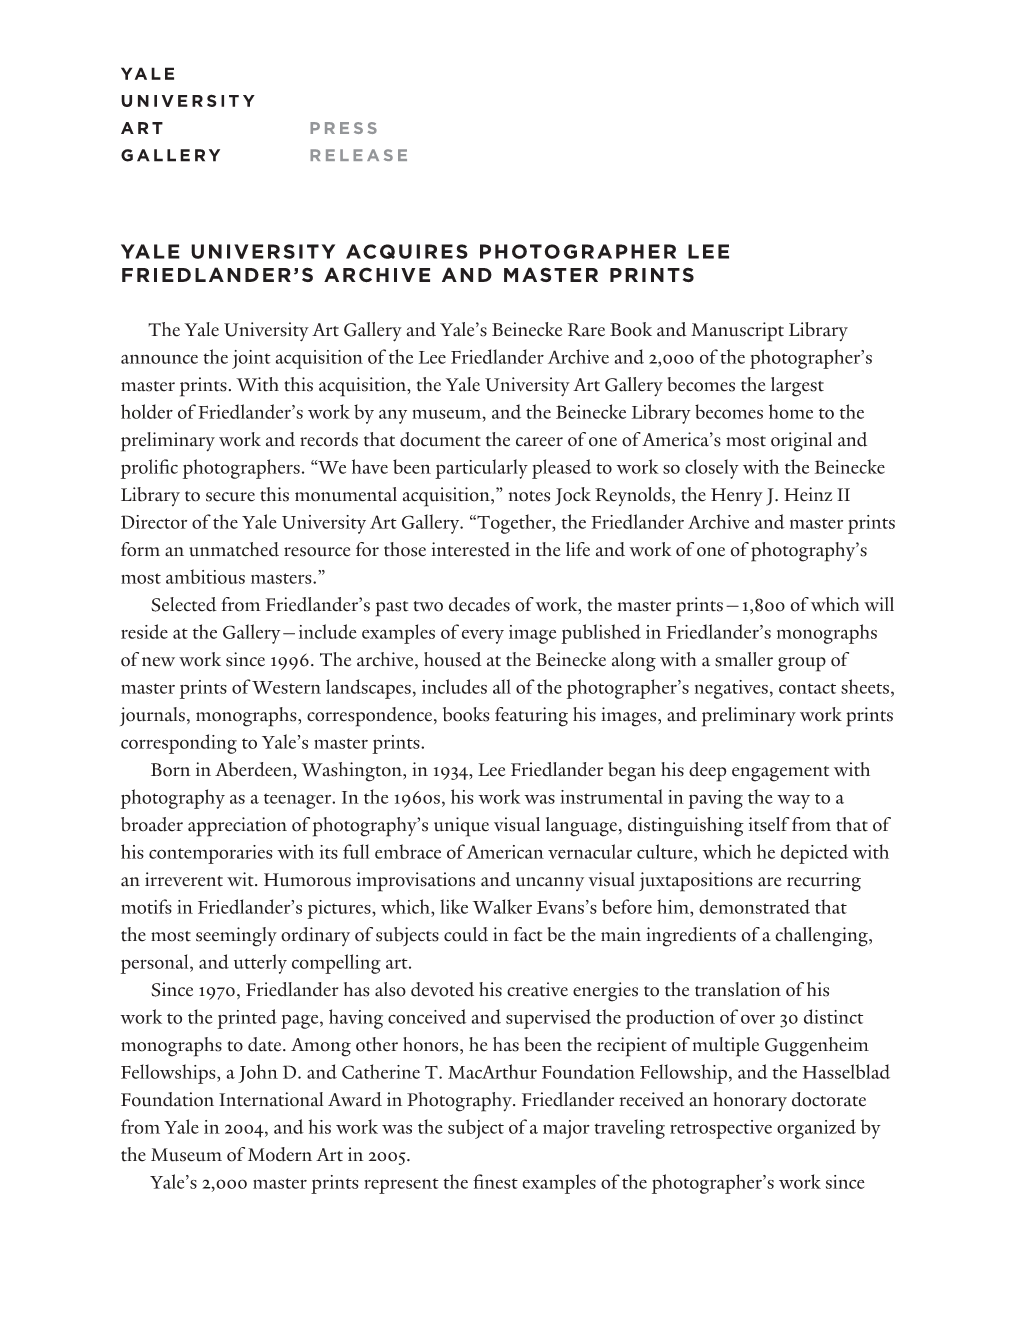 Press Release (PDF)